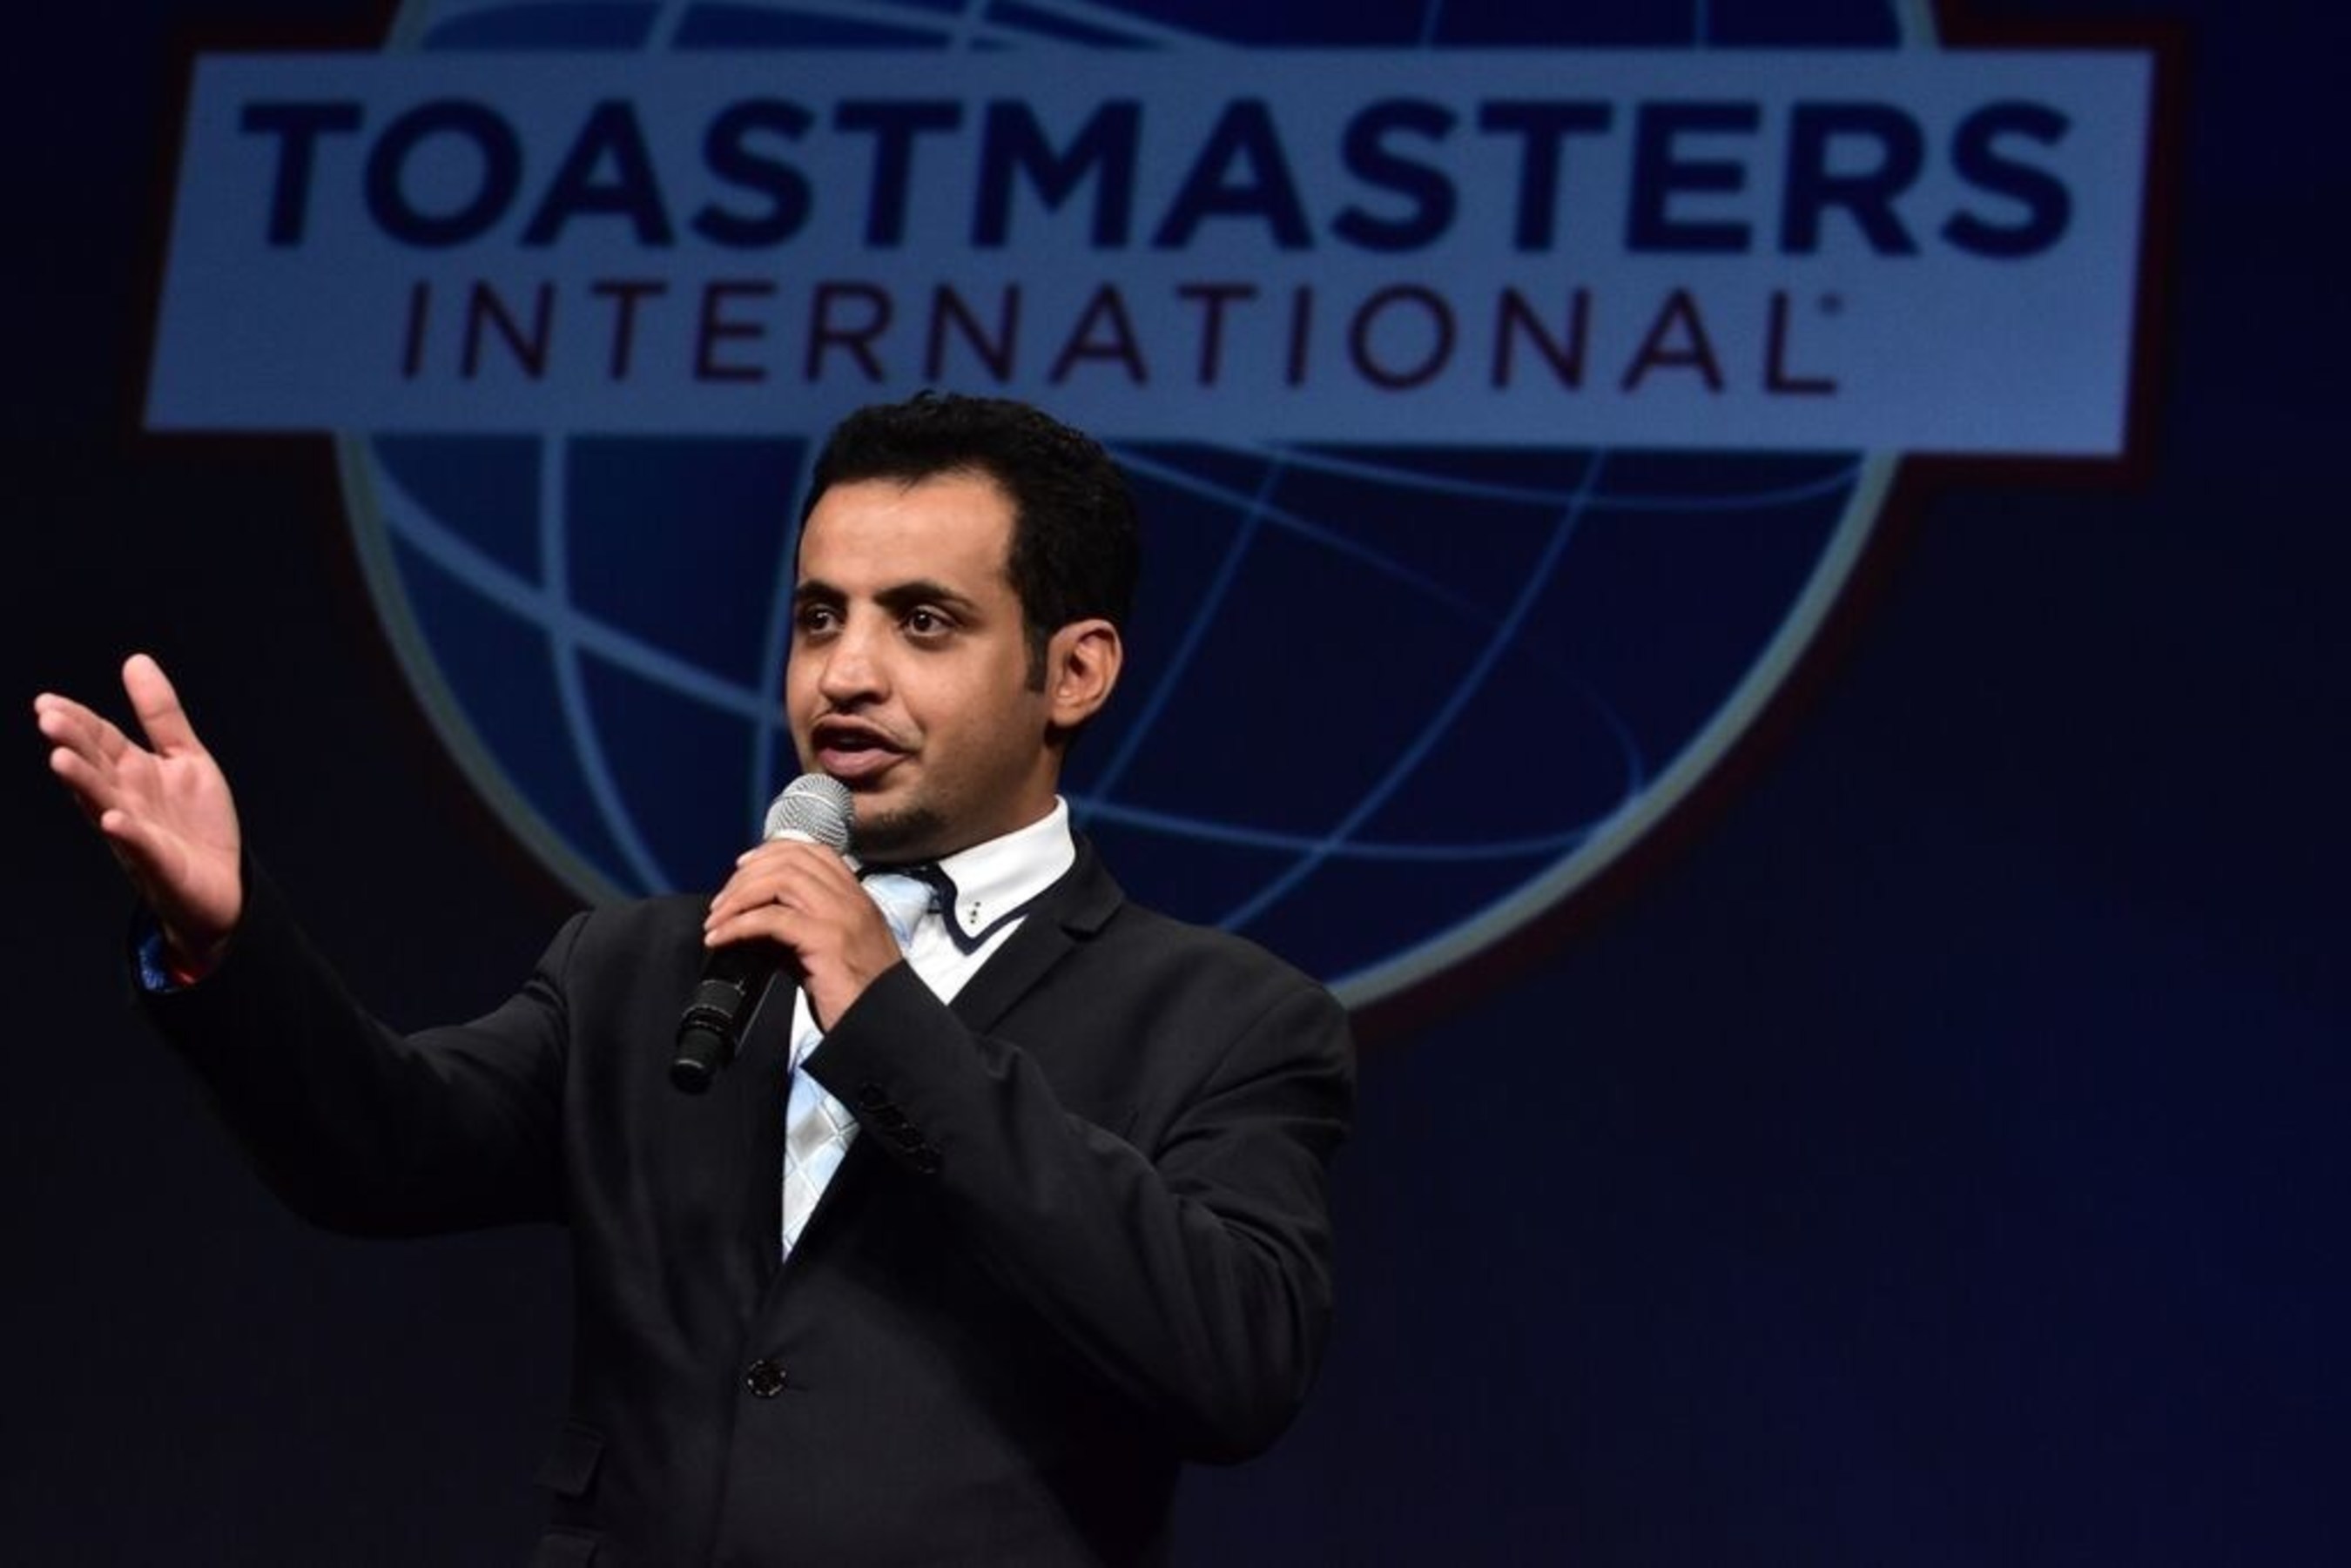 Mohammed Qahtani, 2015 World Champion of Public Speaking